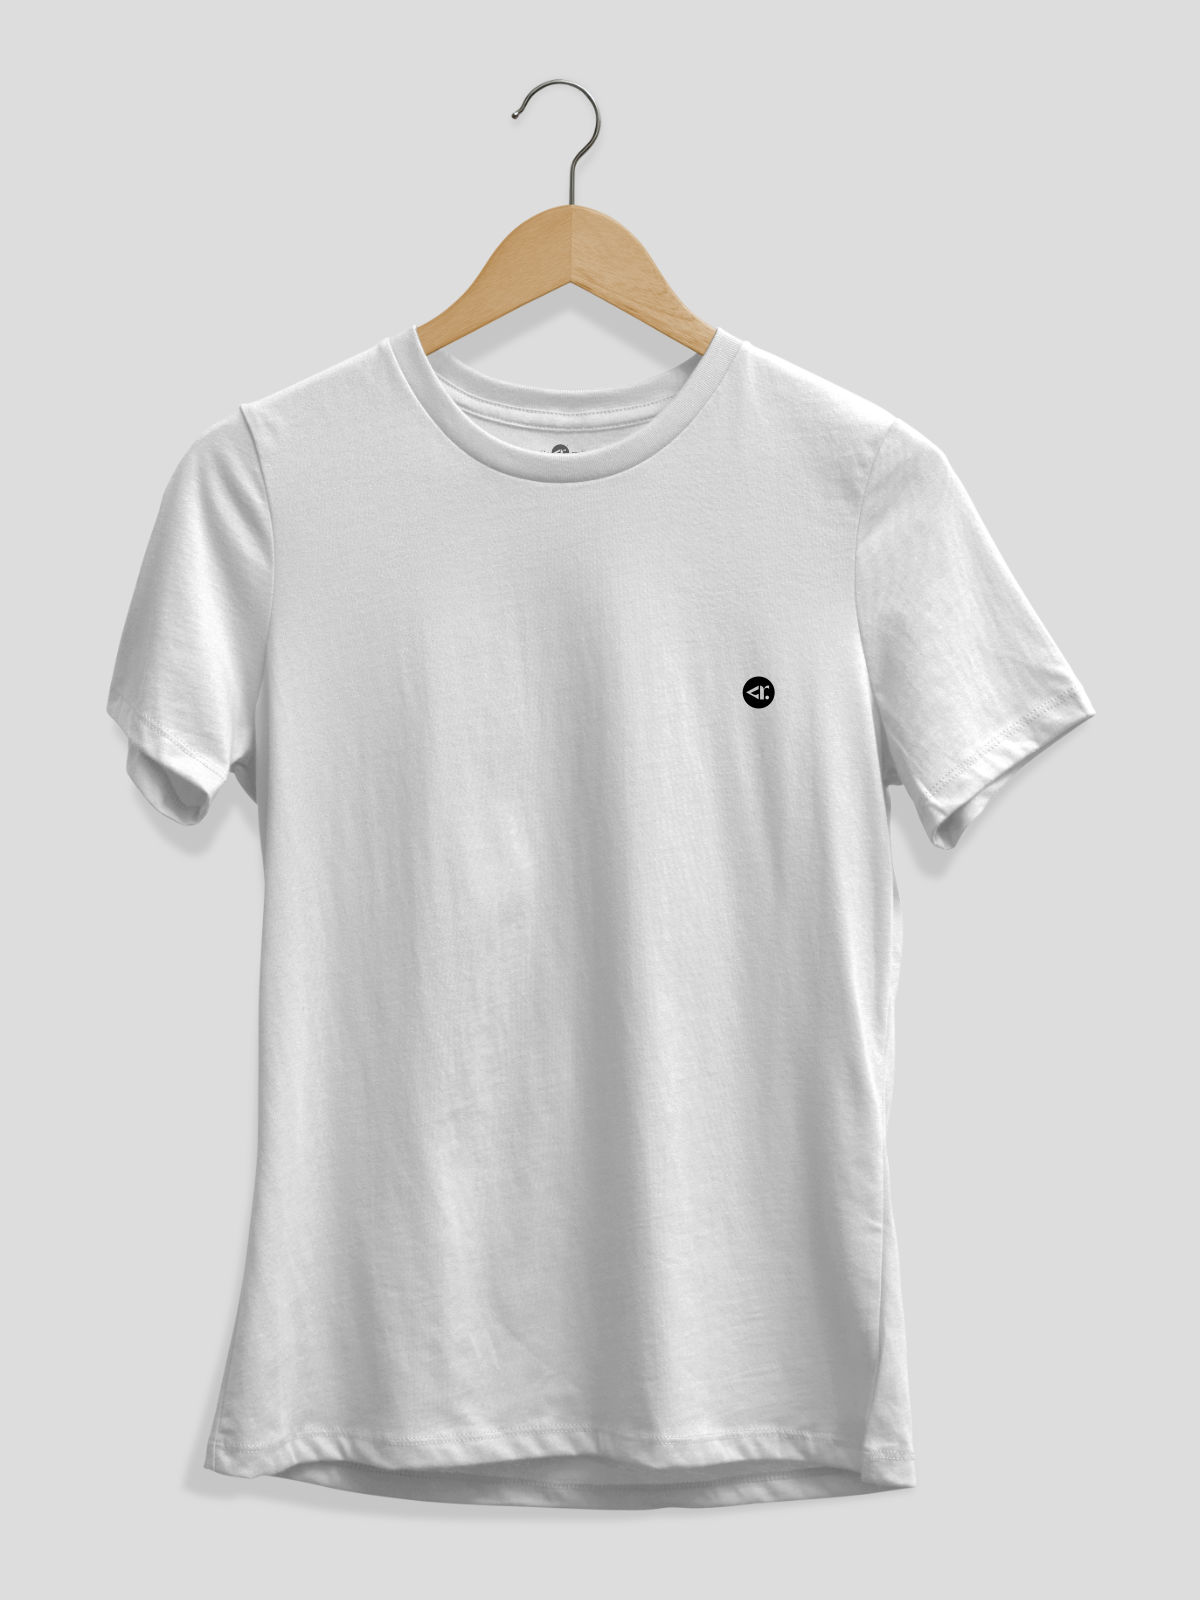 Original rounded white t-shirt